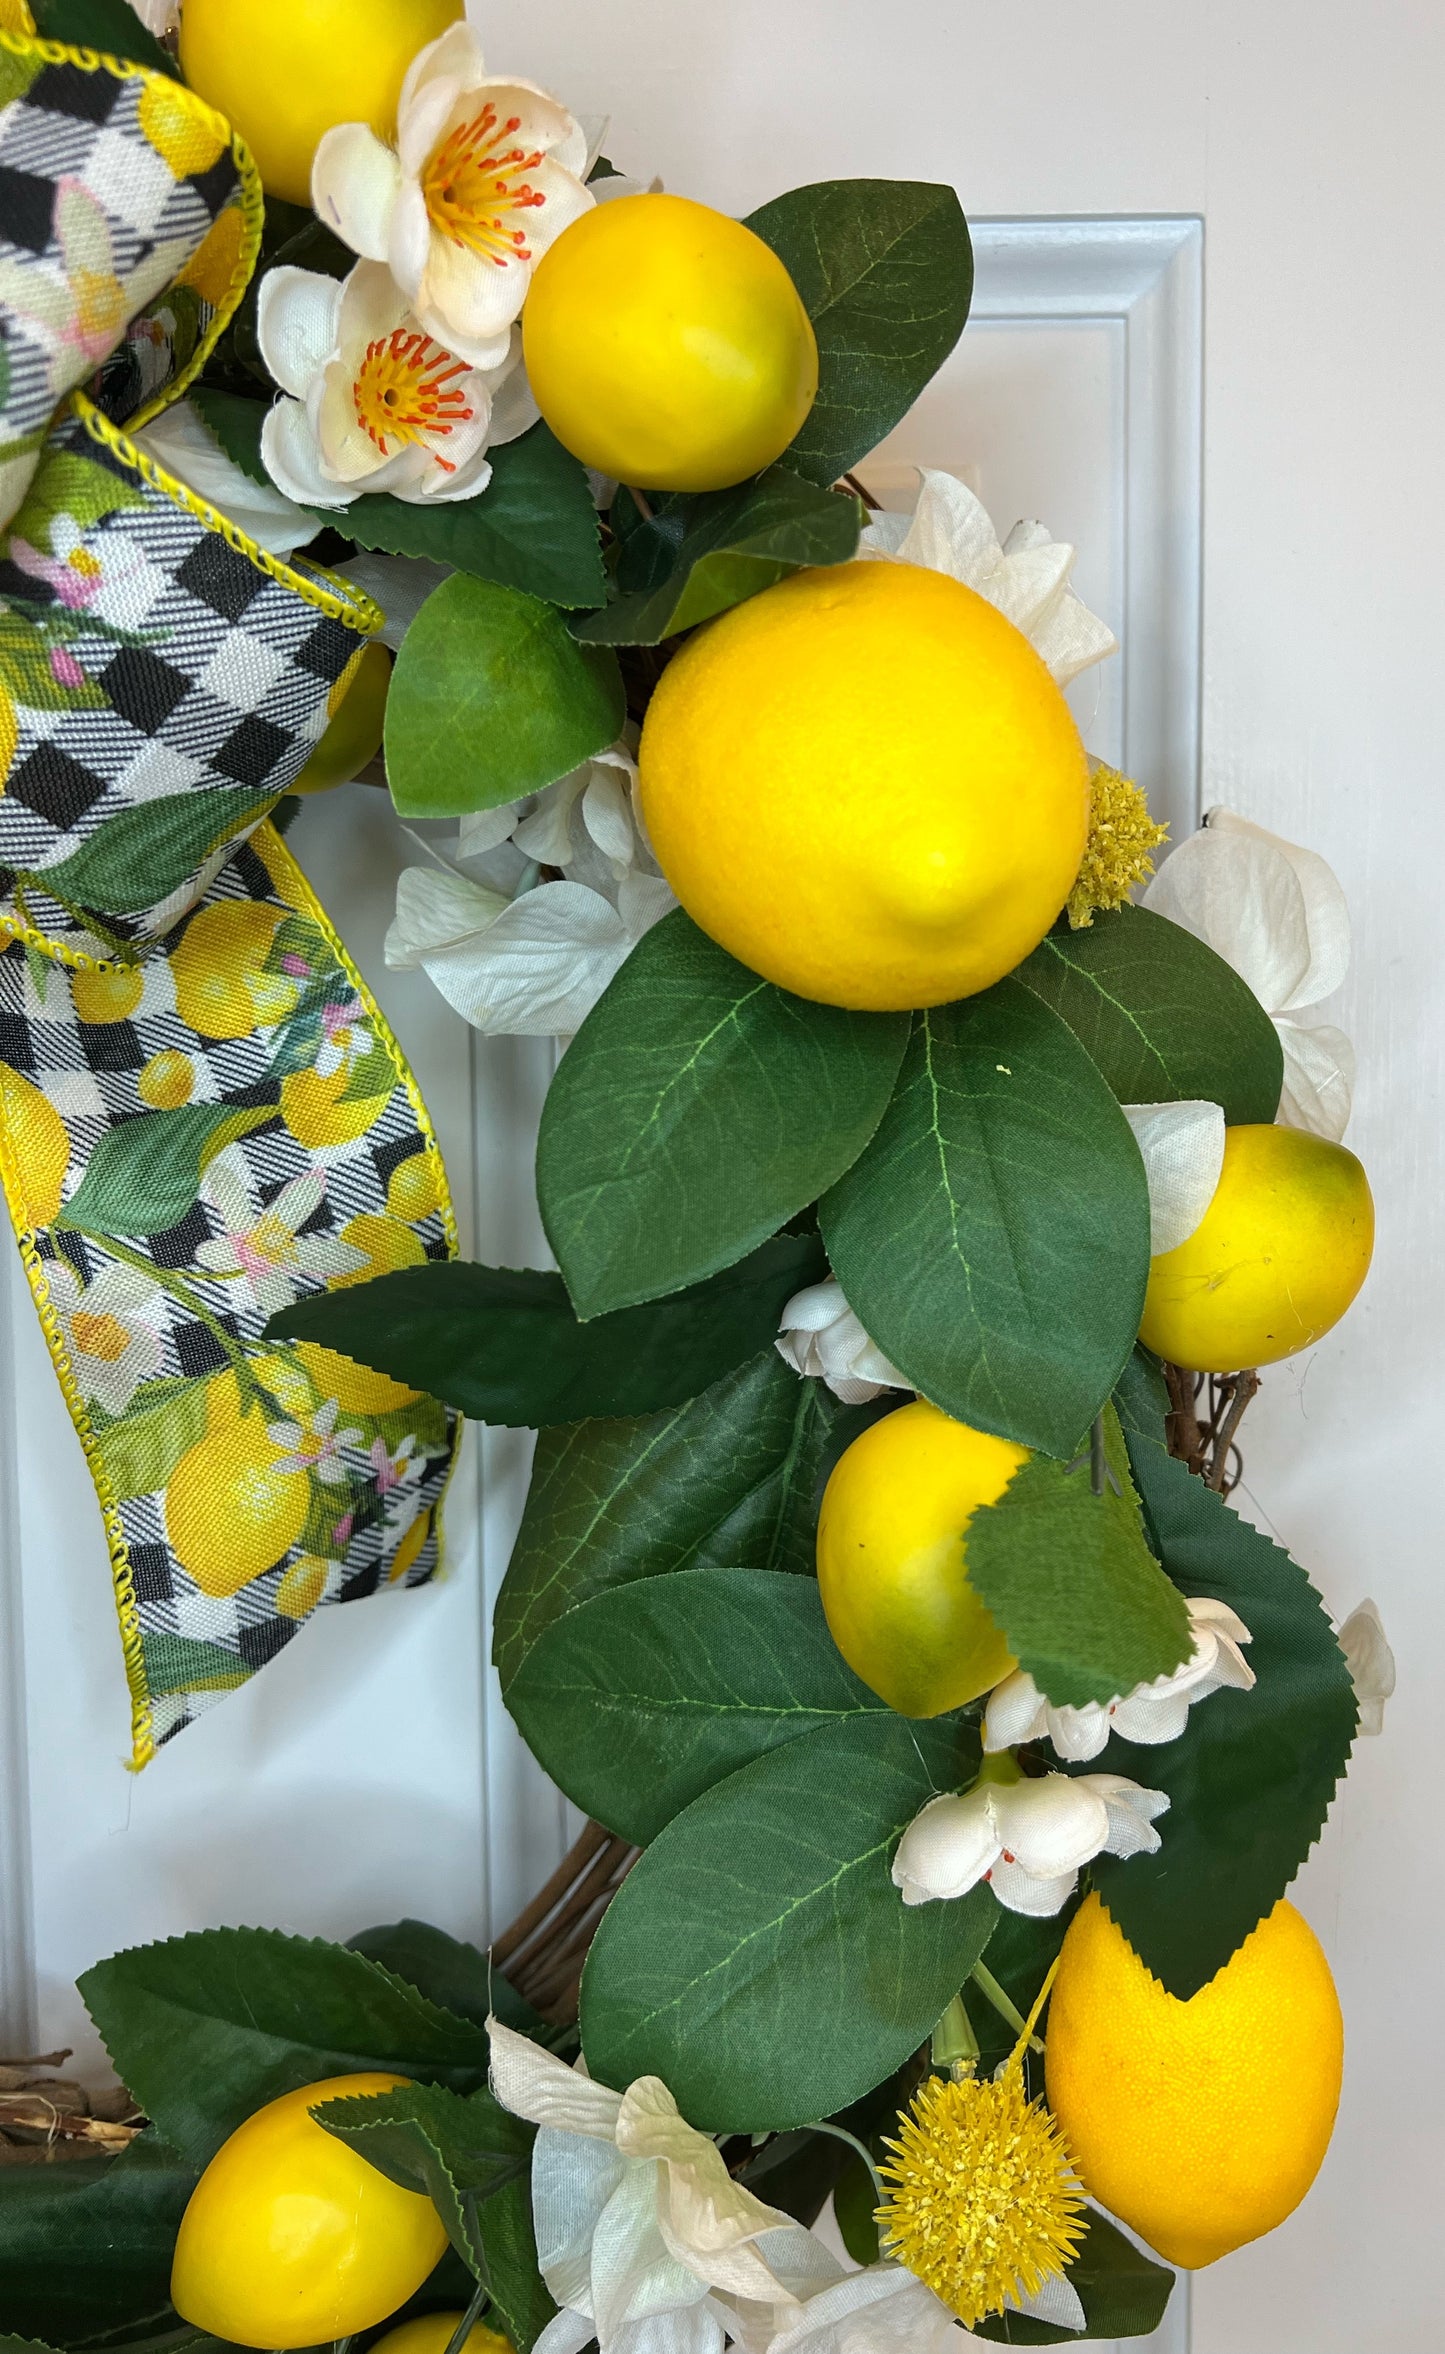 Corona de limones de verano de 14"